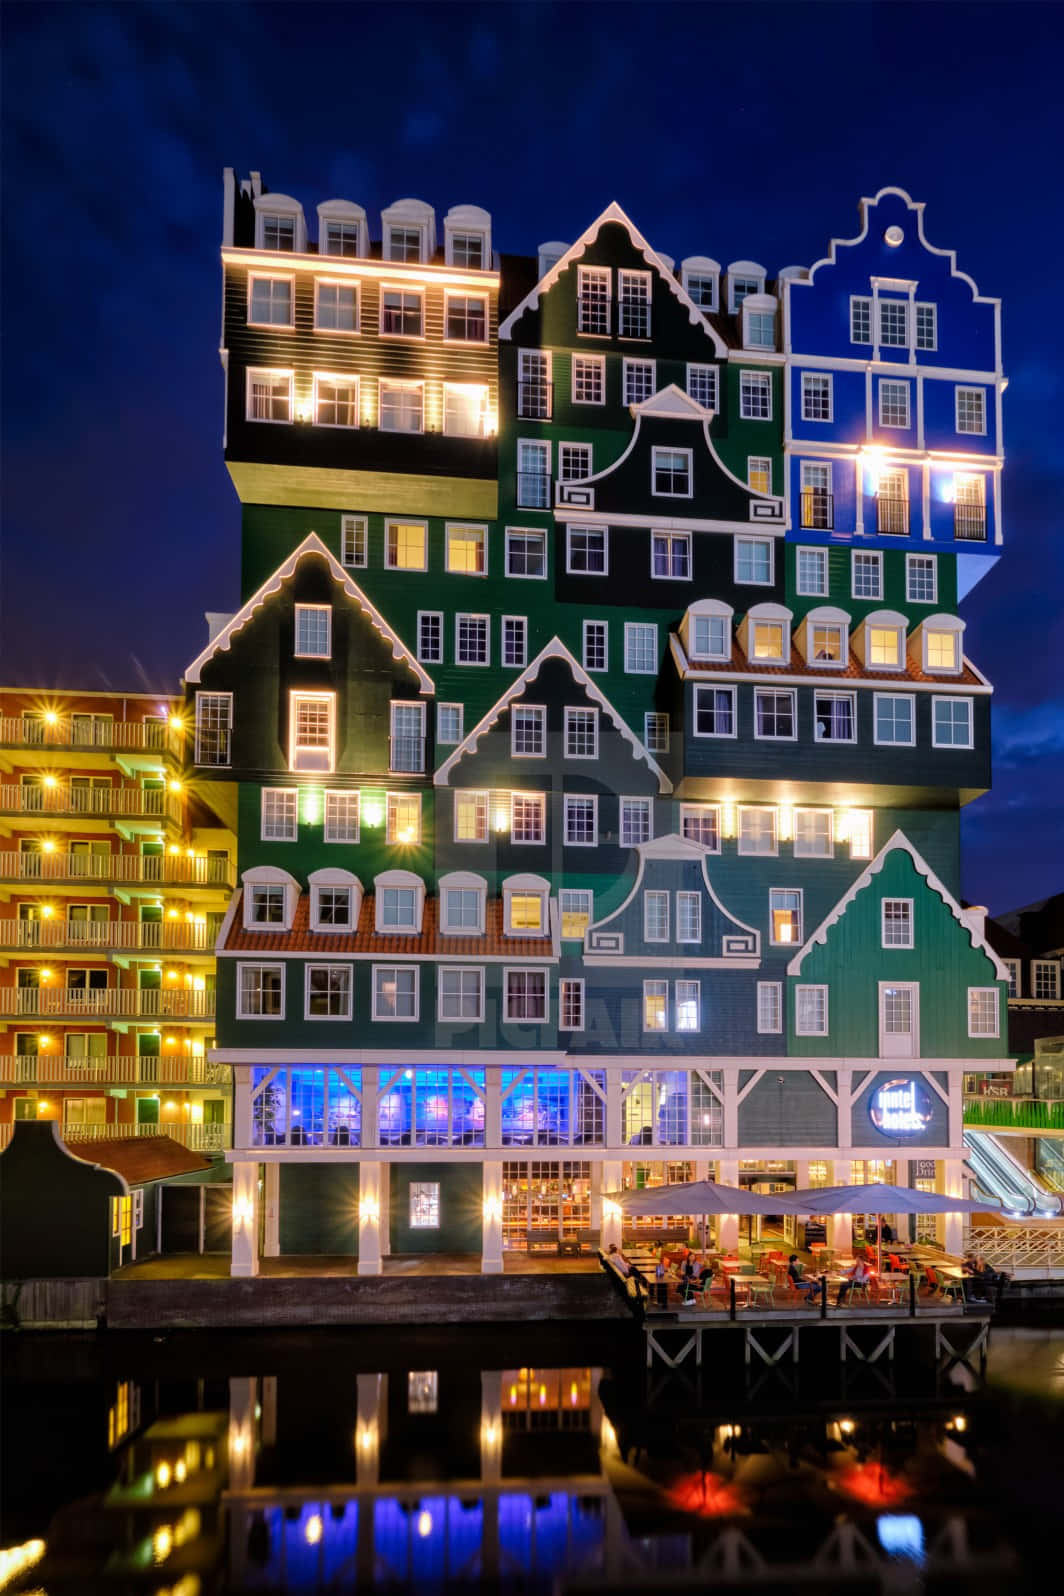 Inntel Hotel Zaandam With Lights Wallpaper